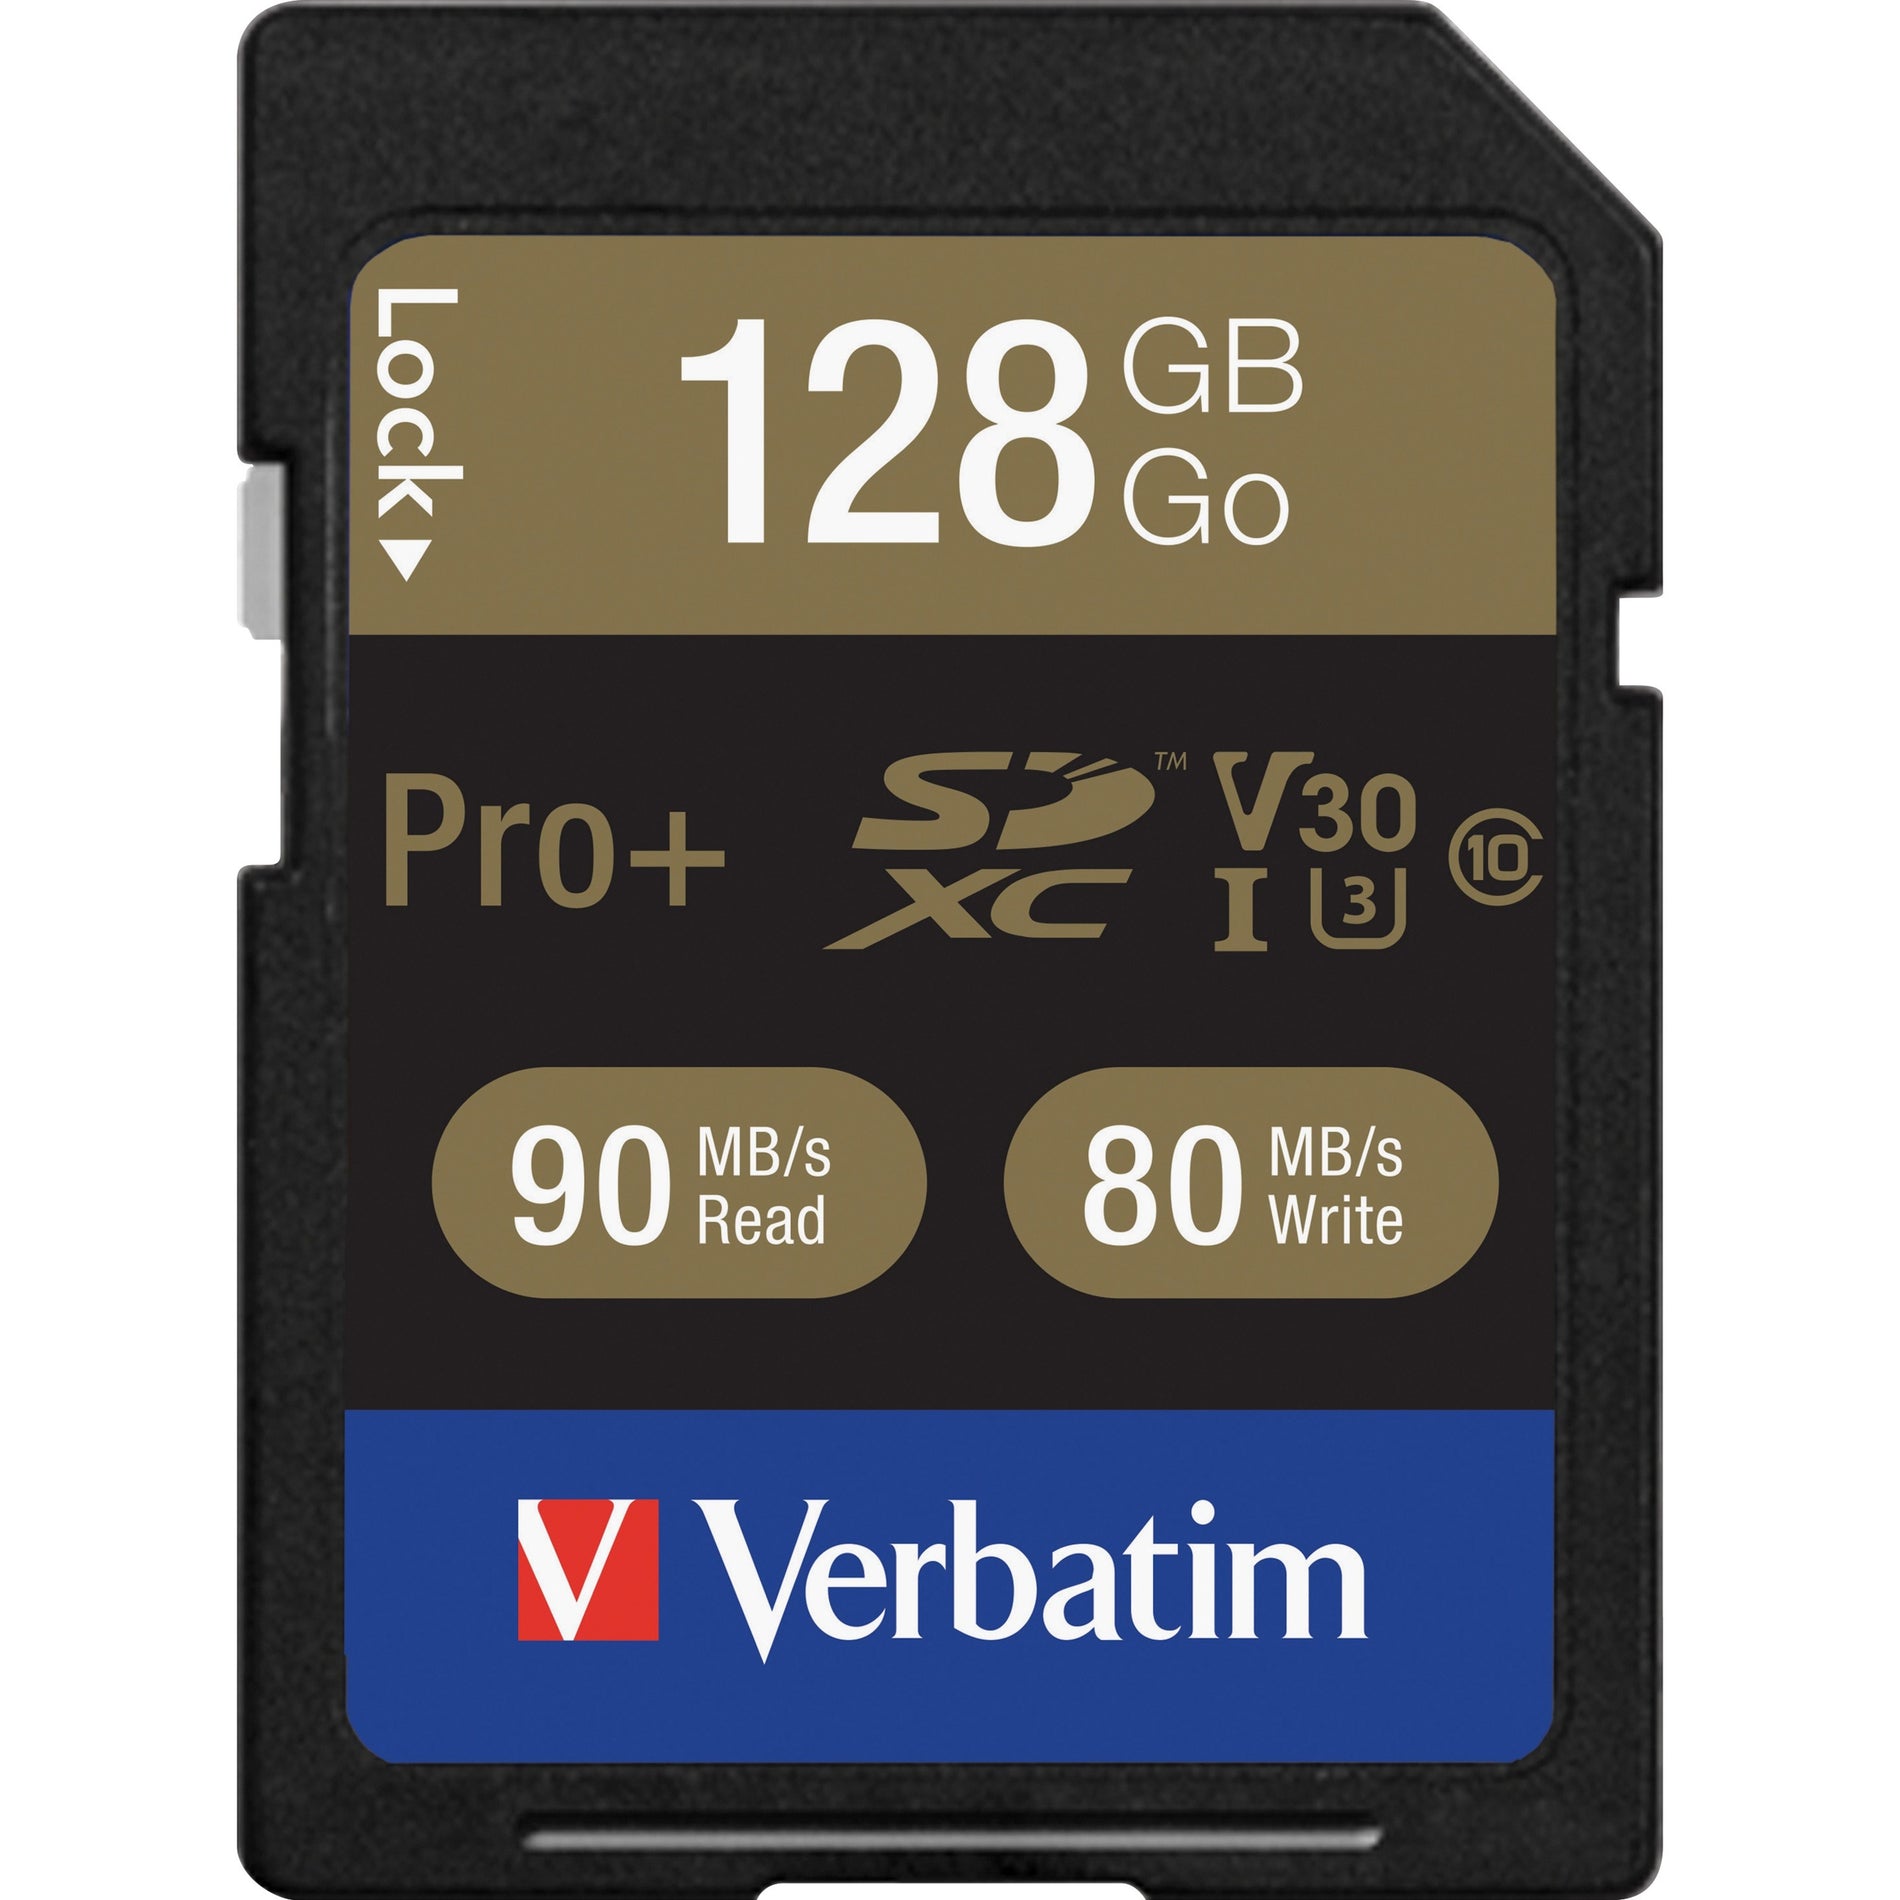 Verbatim 49198 Pro Plus 128 GB SDXC Memory Card, Class 10/UHS-I (U3), 90 MB/s Read Speed, 80 MB/s Write Speed